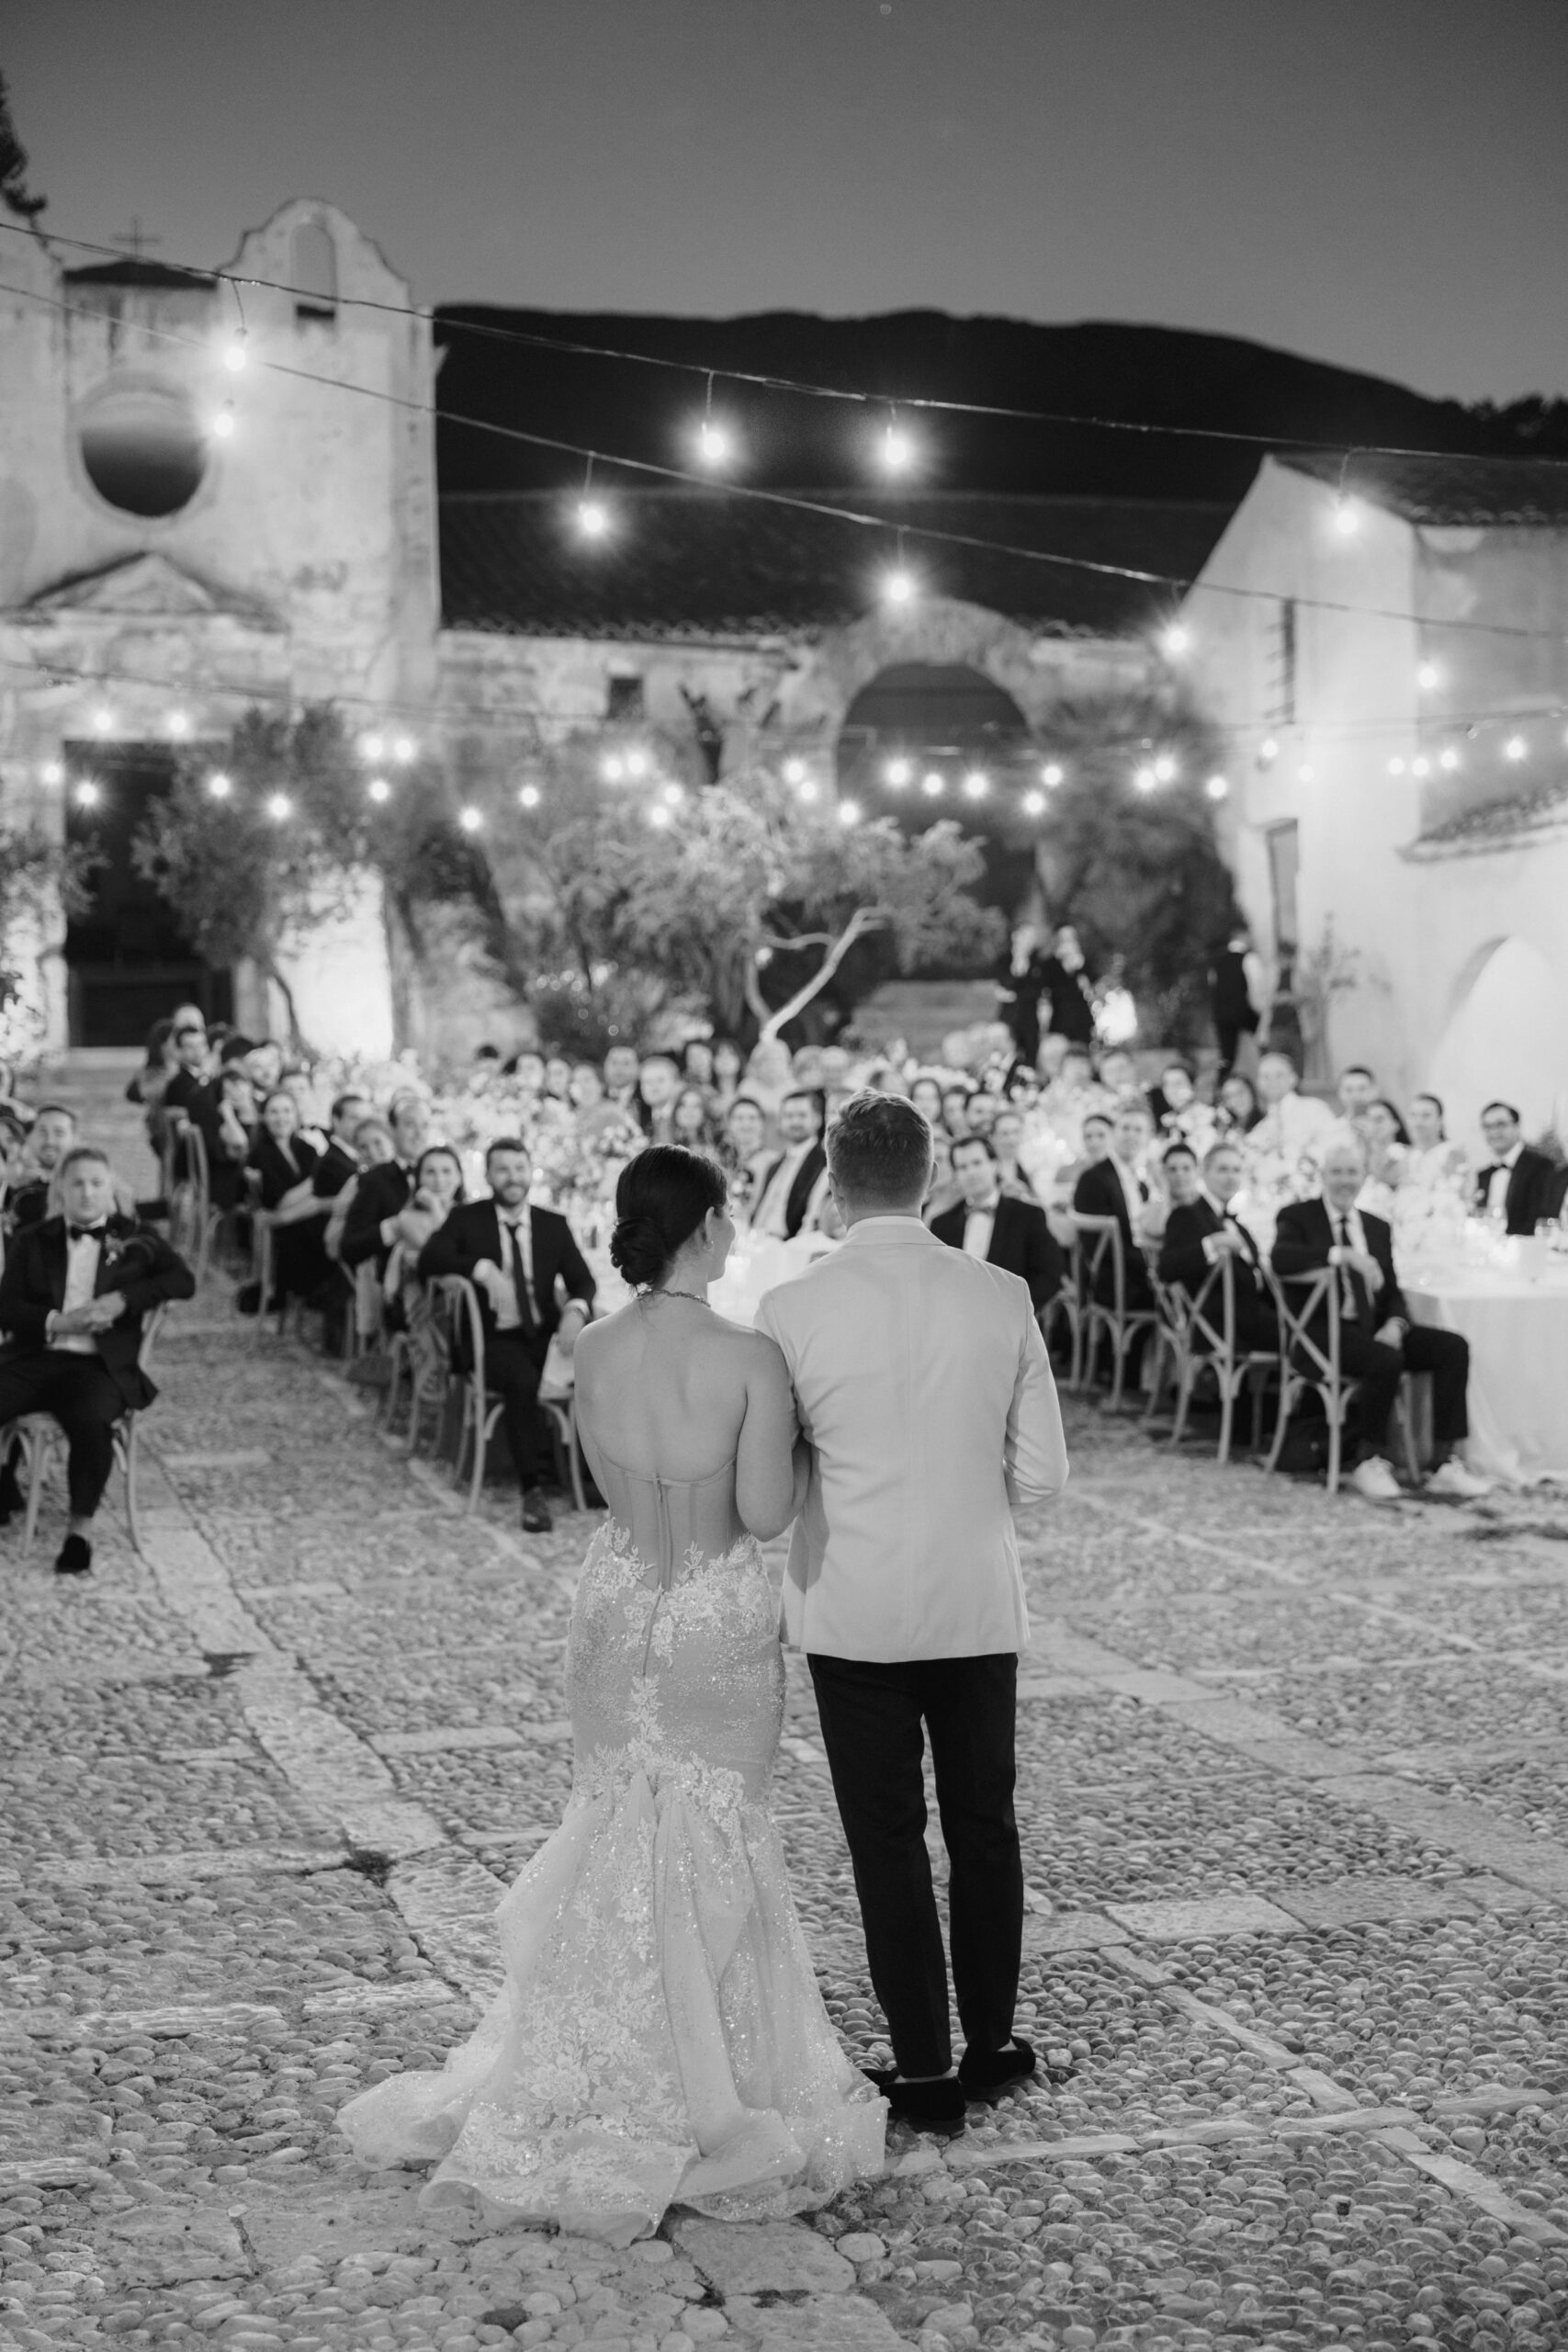 Destination Wedding in Italy - Modern Black-Tie Wedding with Coastal Views - Laura Bravi Events - Larisa Shorina Photography 